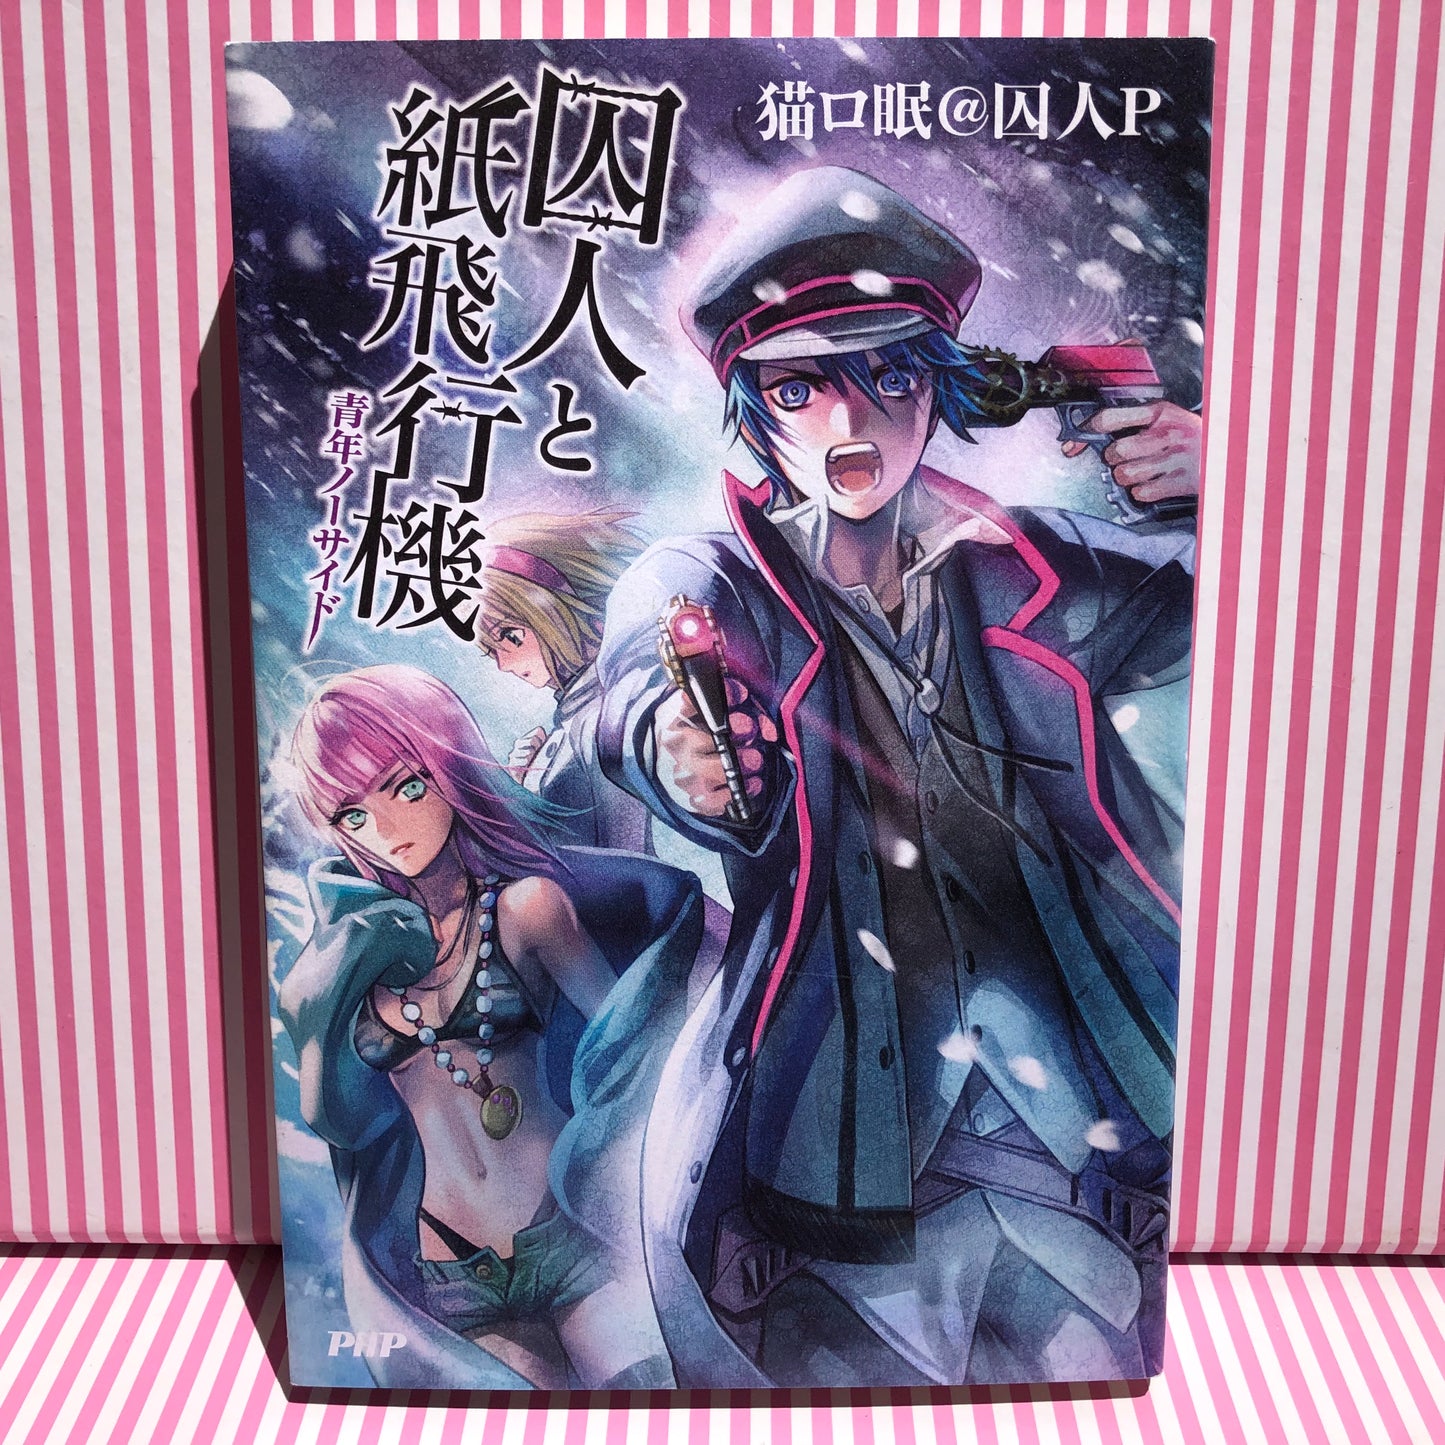 Light Novel Vocaloid Nico Nico Douga Prisoners, paper planes, Young Man, No Side - Miku Hatsune, Syujin P